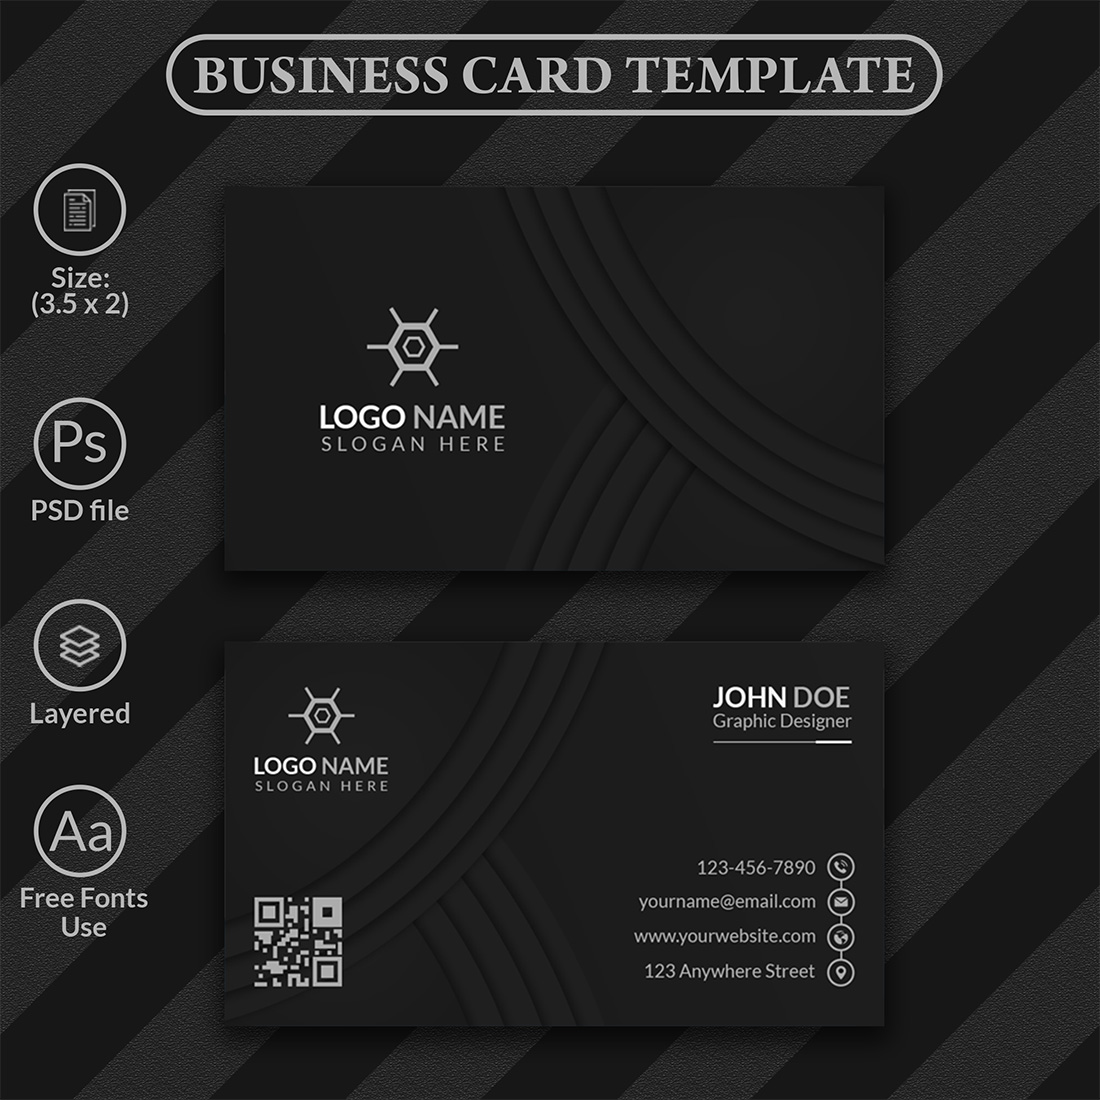 Luxury Business Card Design Template details.